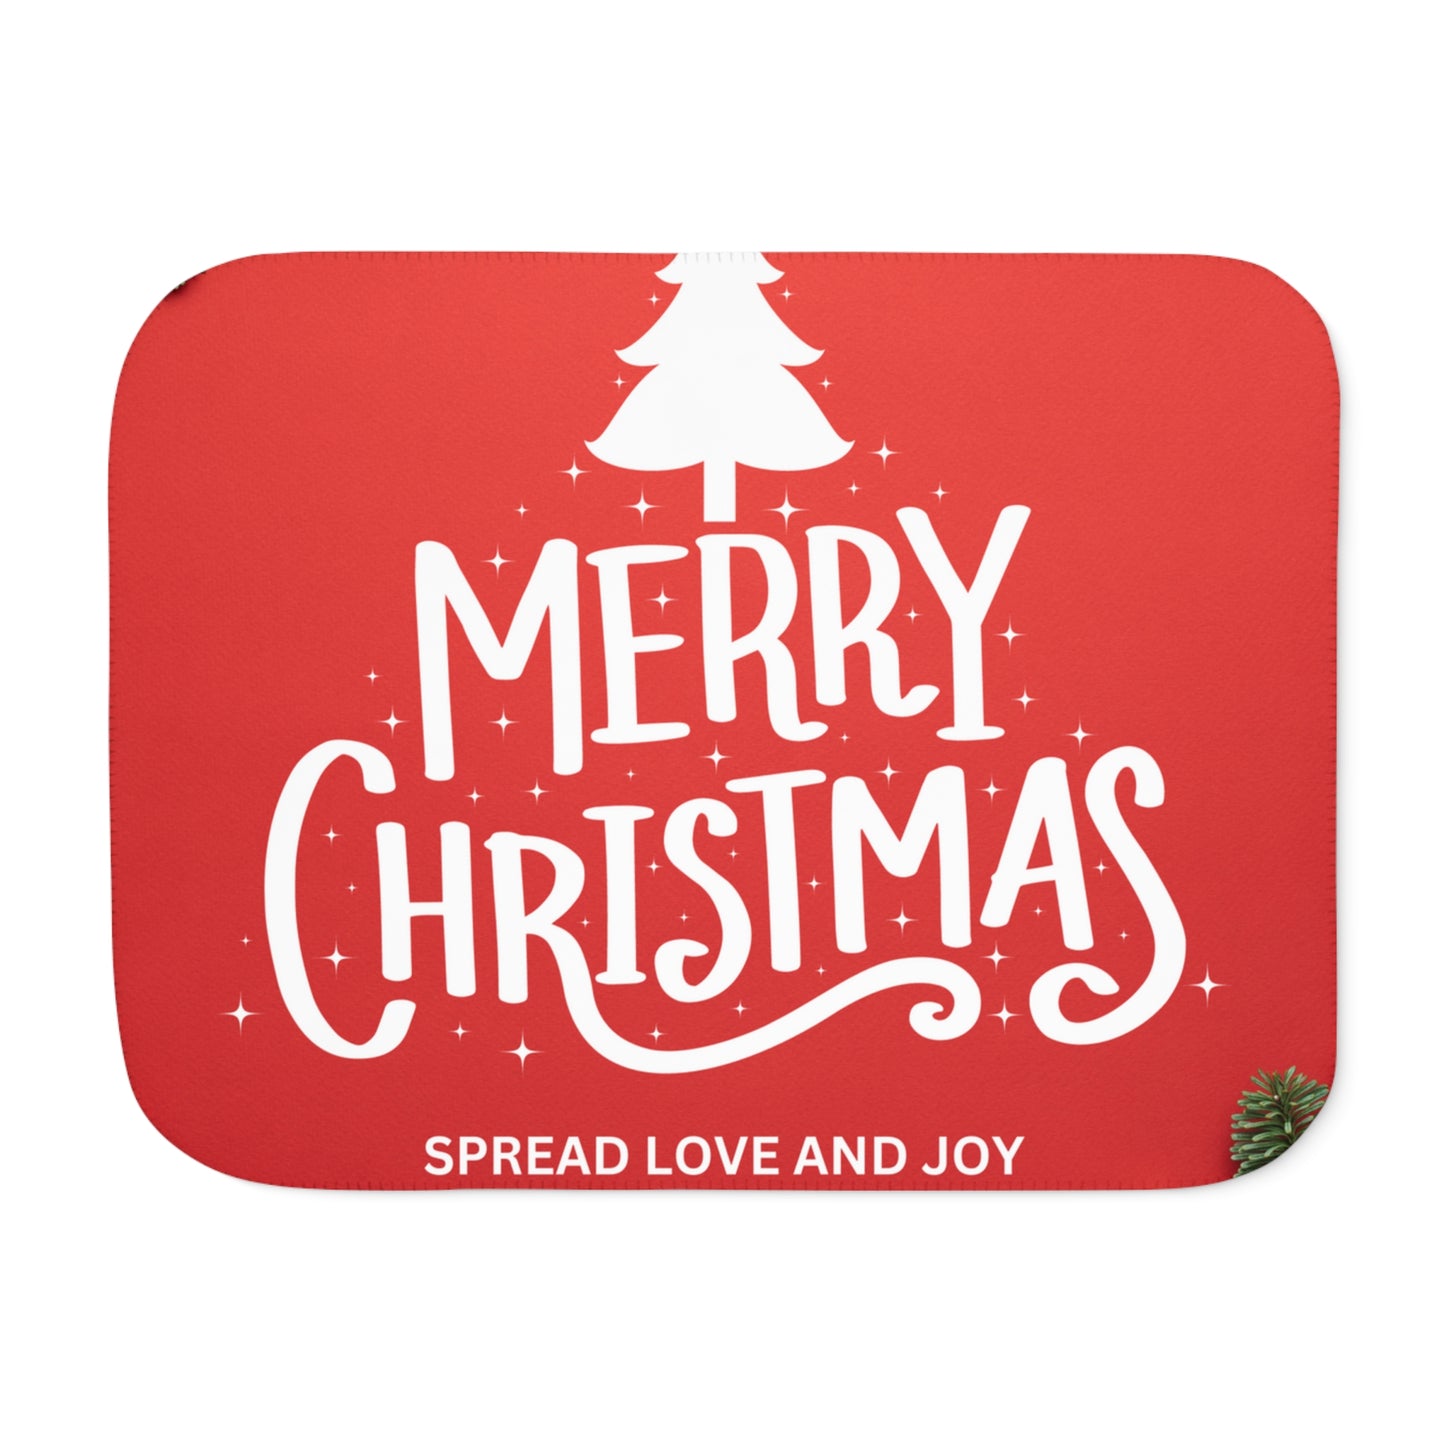 Merry Christmas, Spread Love and Joy Printed Sherpa Blanket